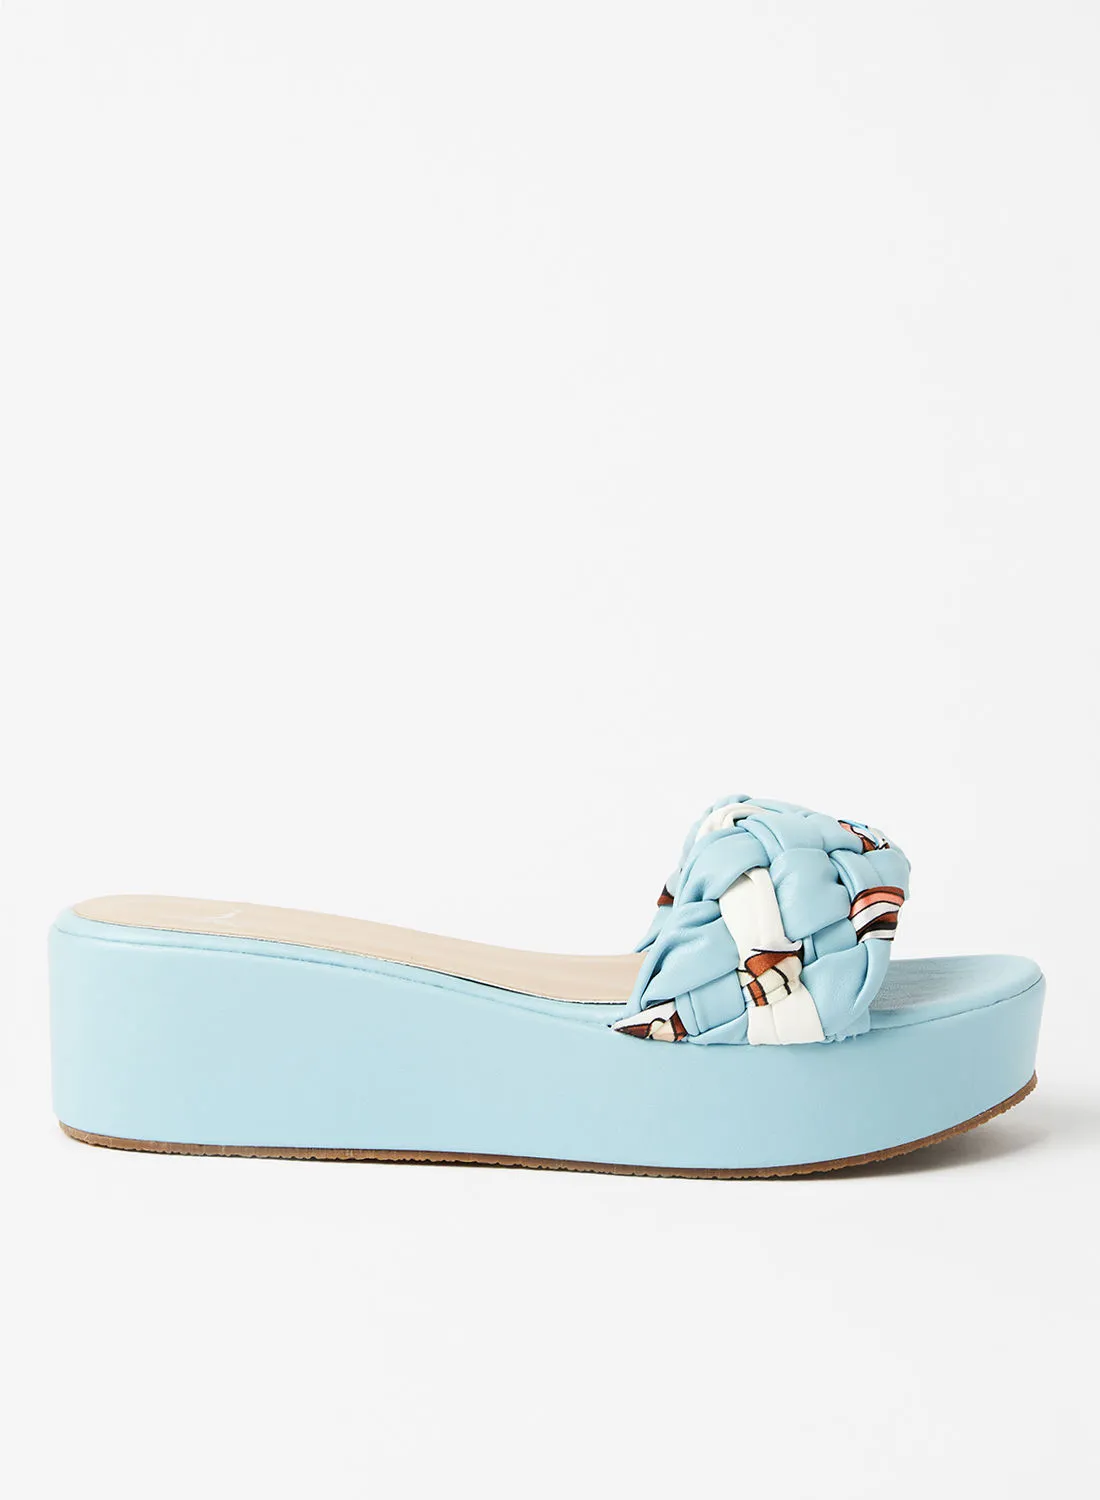 Jove Casual Slip-On Platform Sandals Blue/White